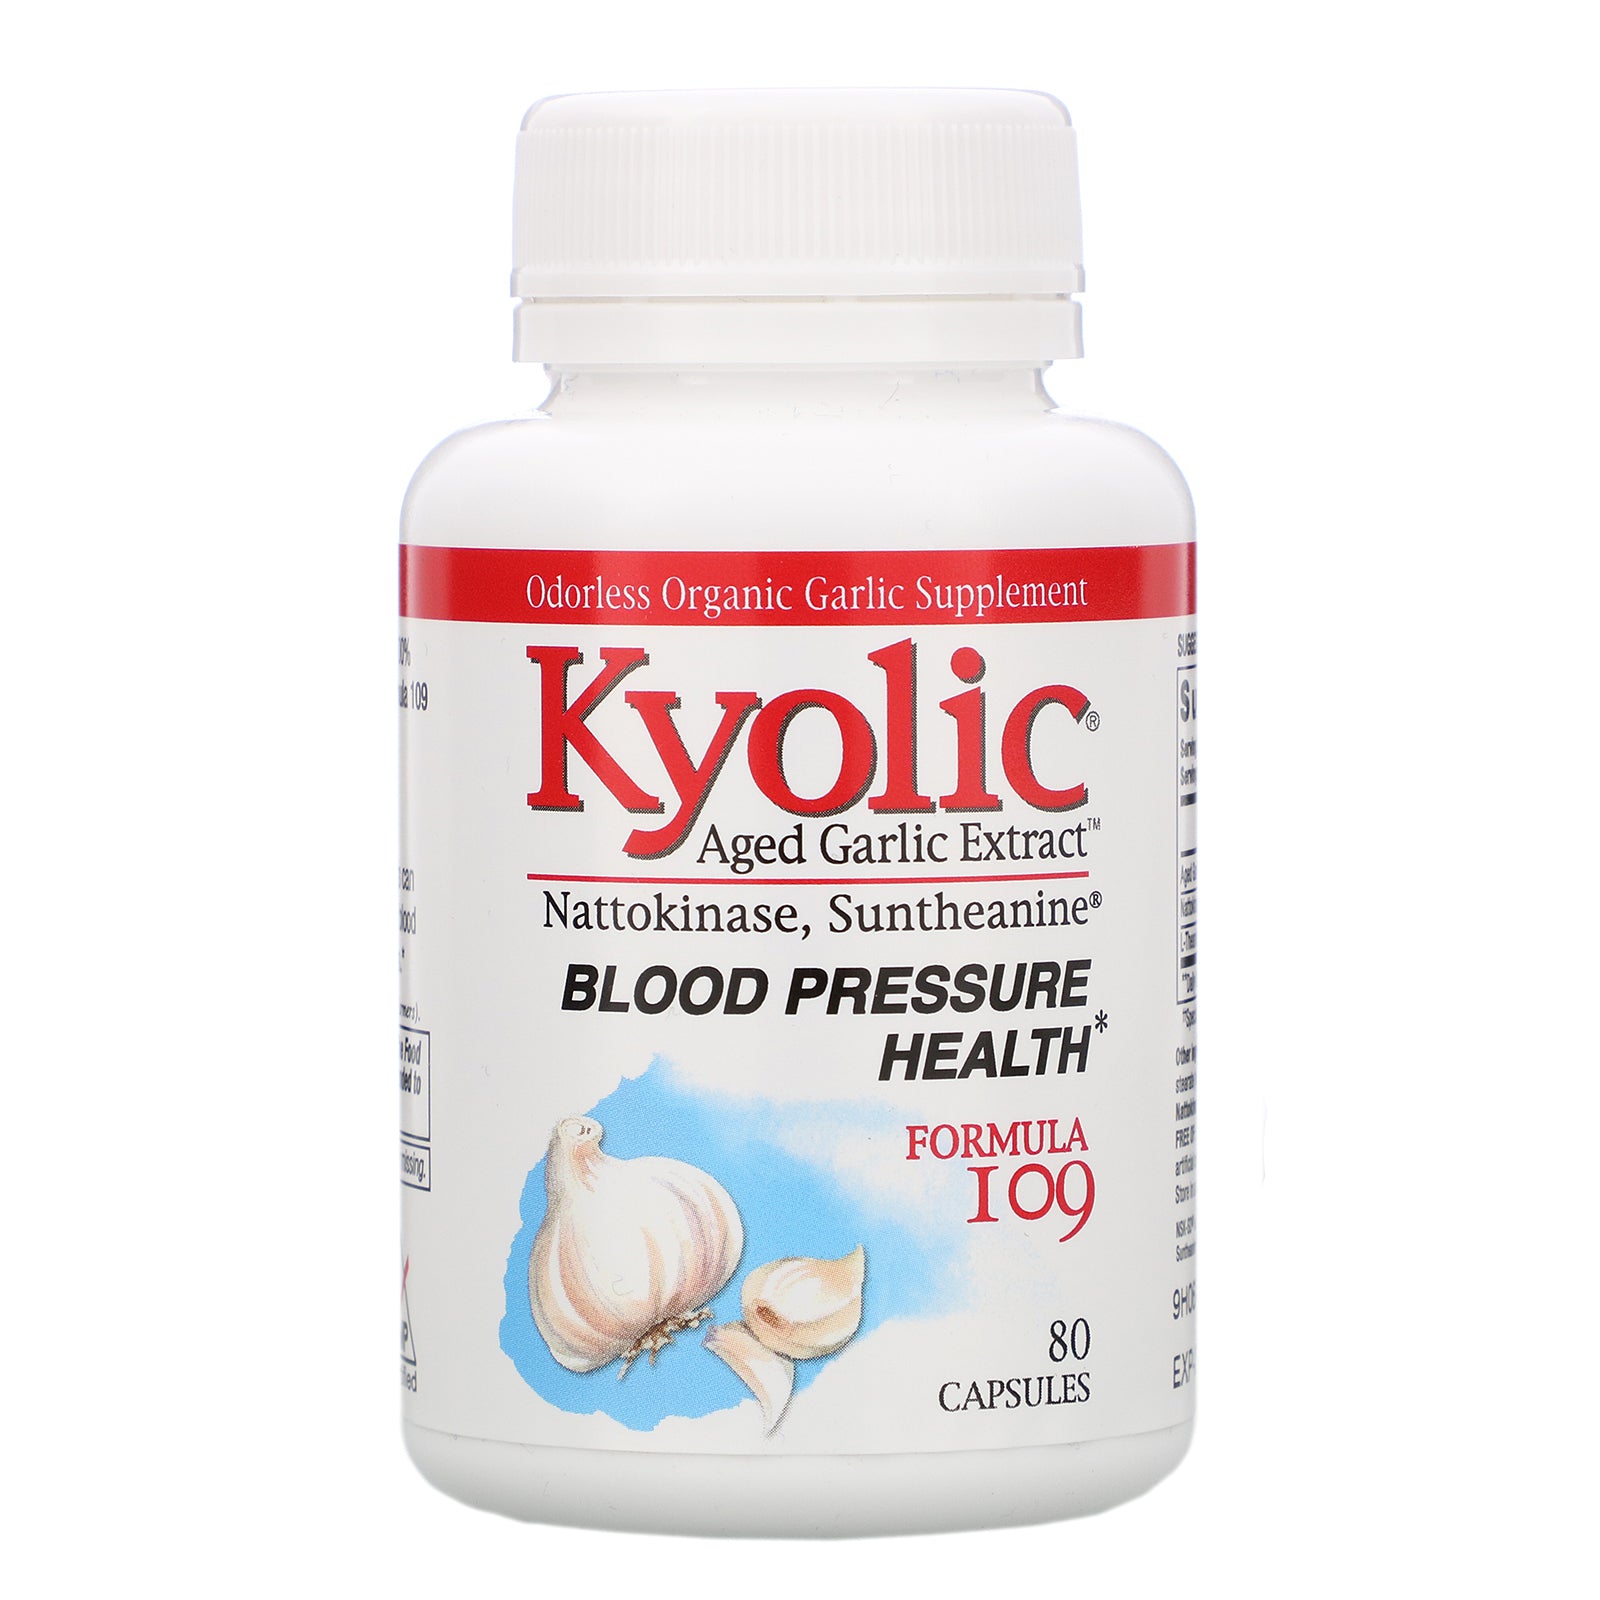 Kyolic, Aged Garlic Extract, Formula 109, 80 Capsules